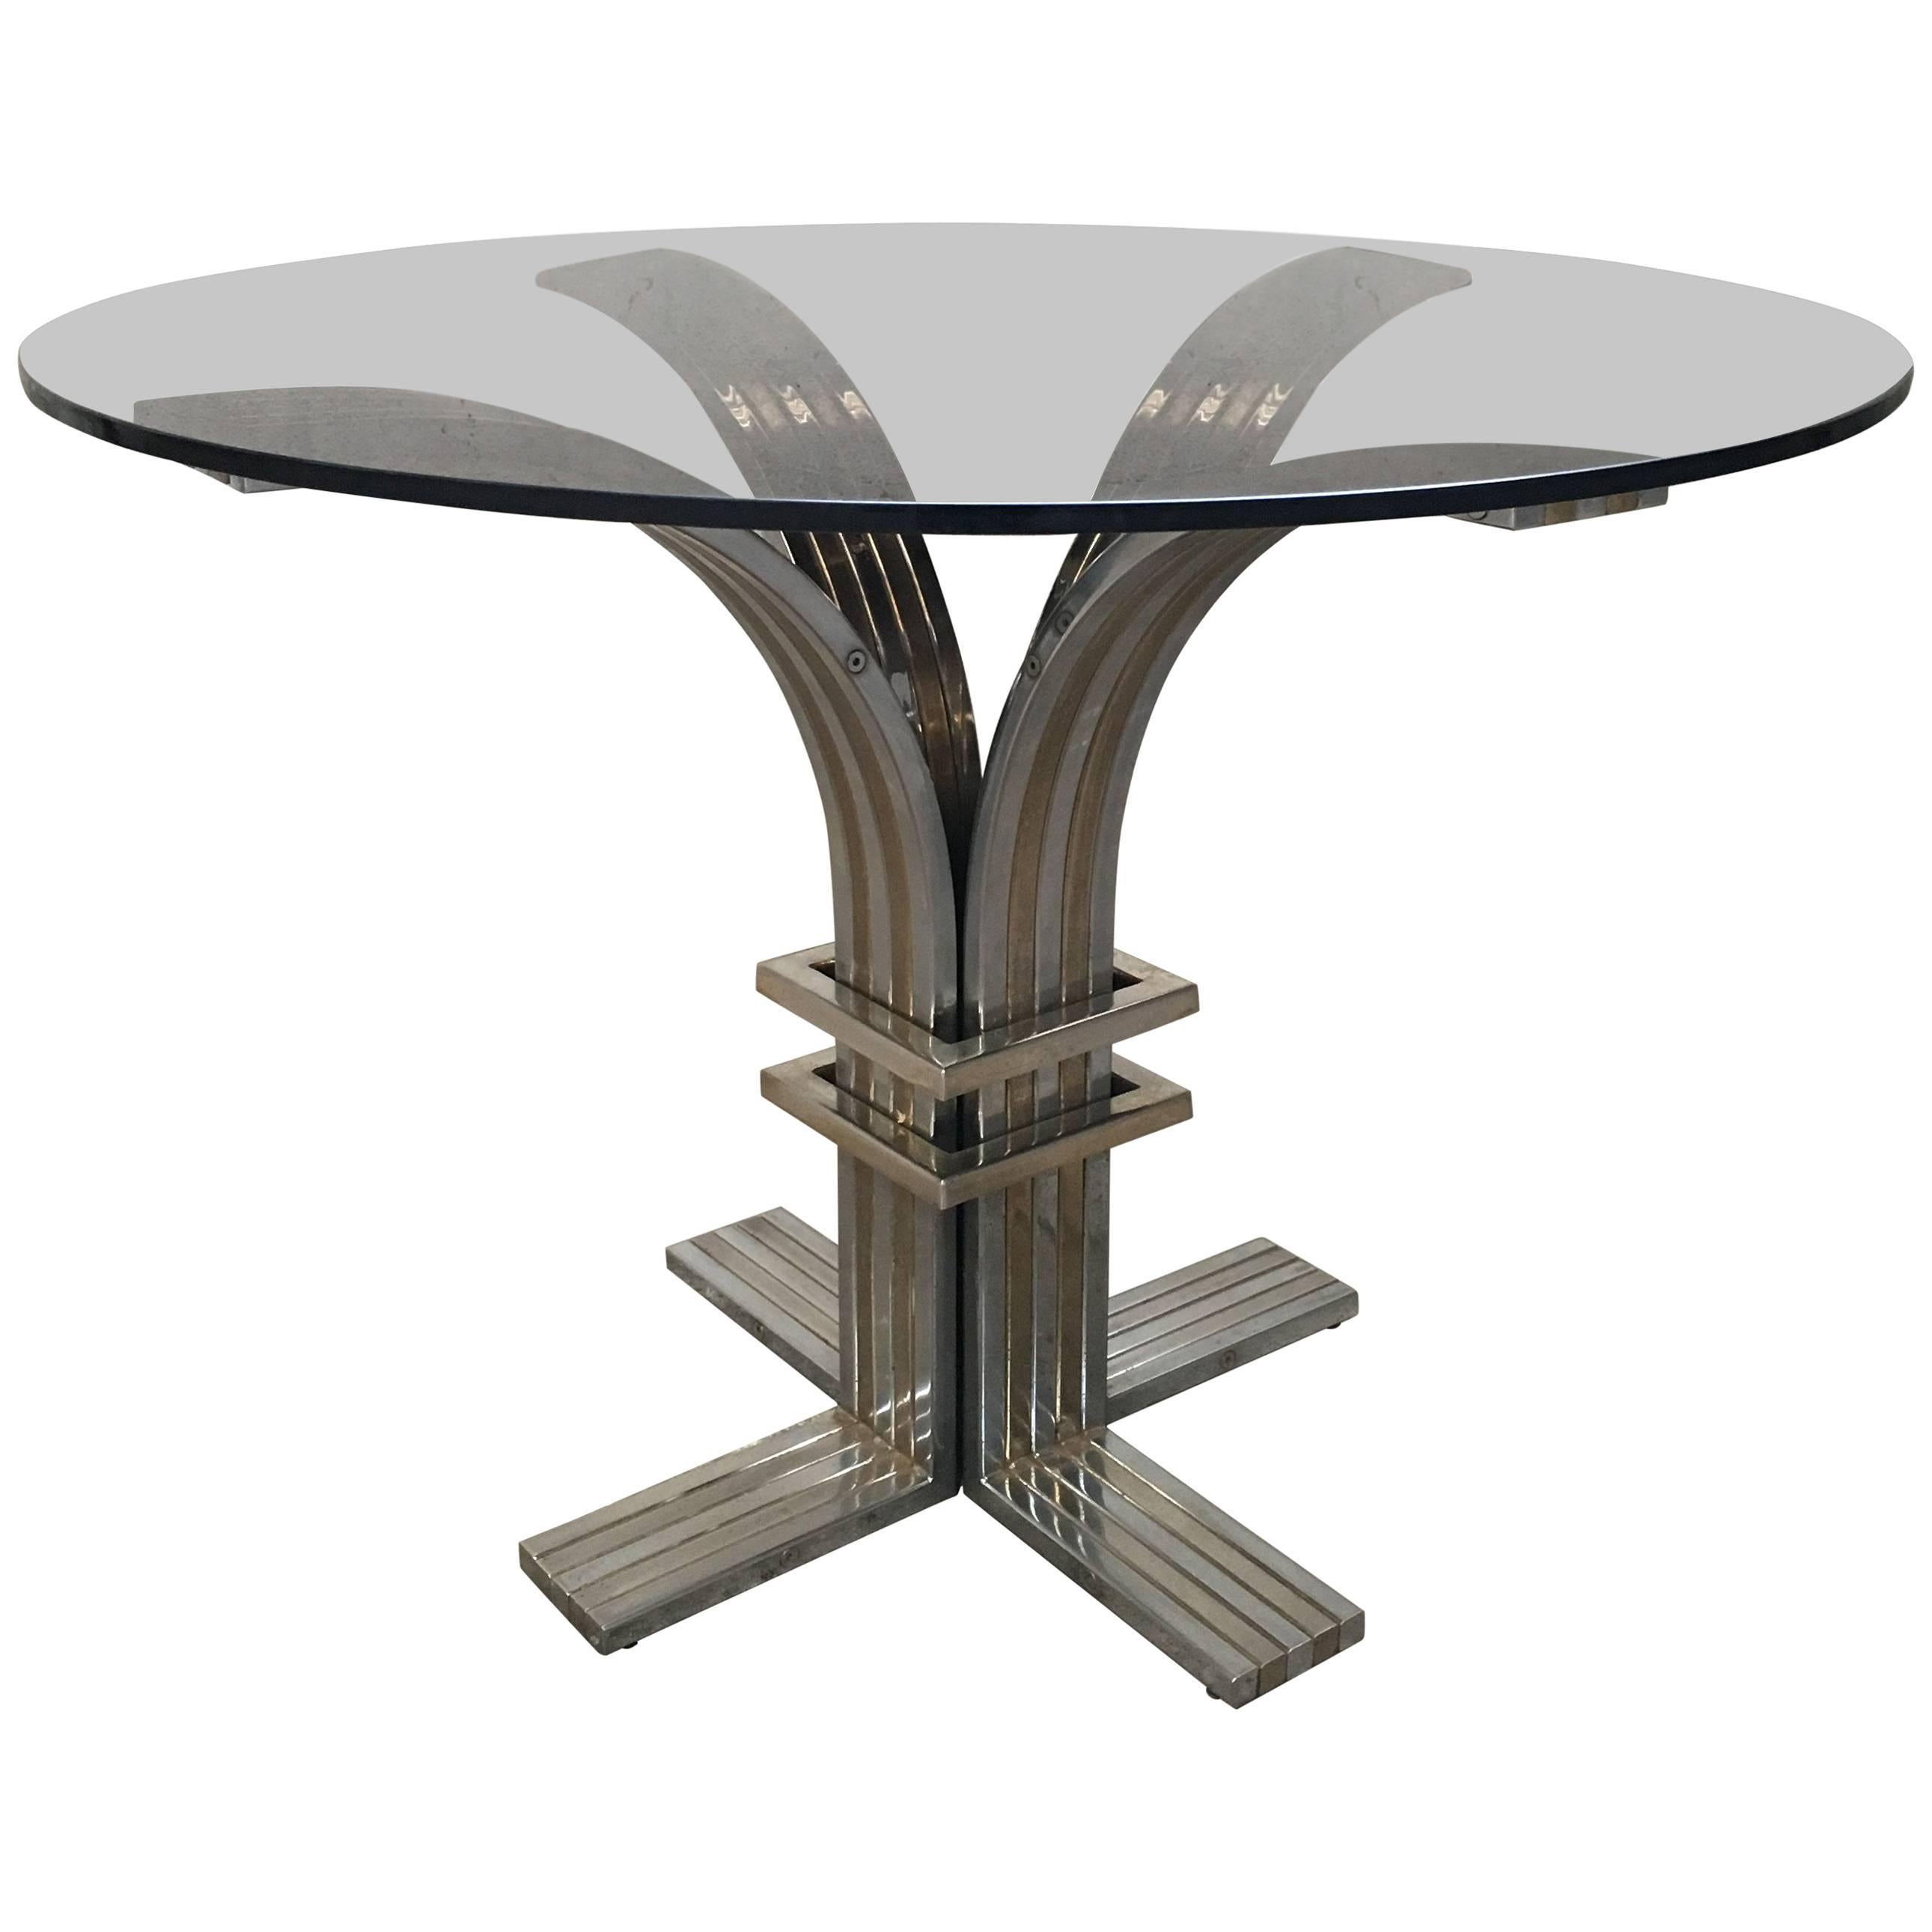 Romeo Rega Pedestal Table with Smoked Glass Top